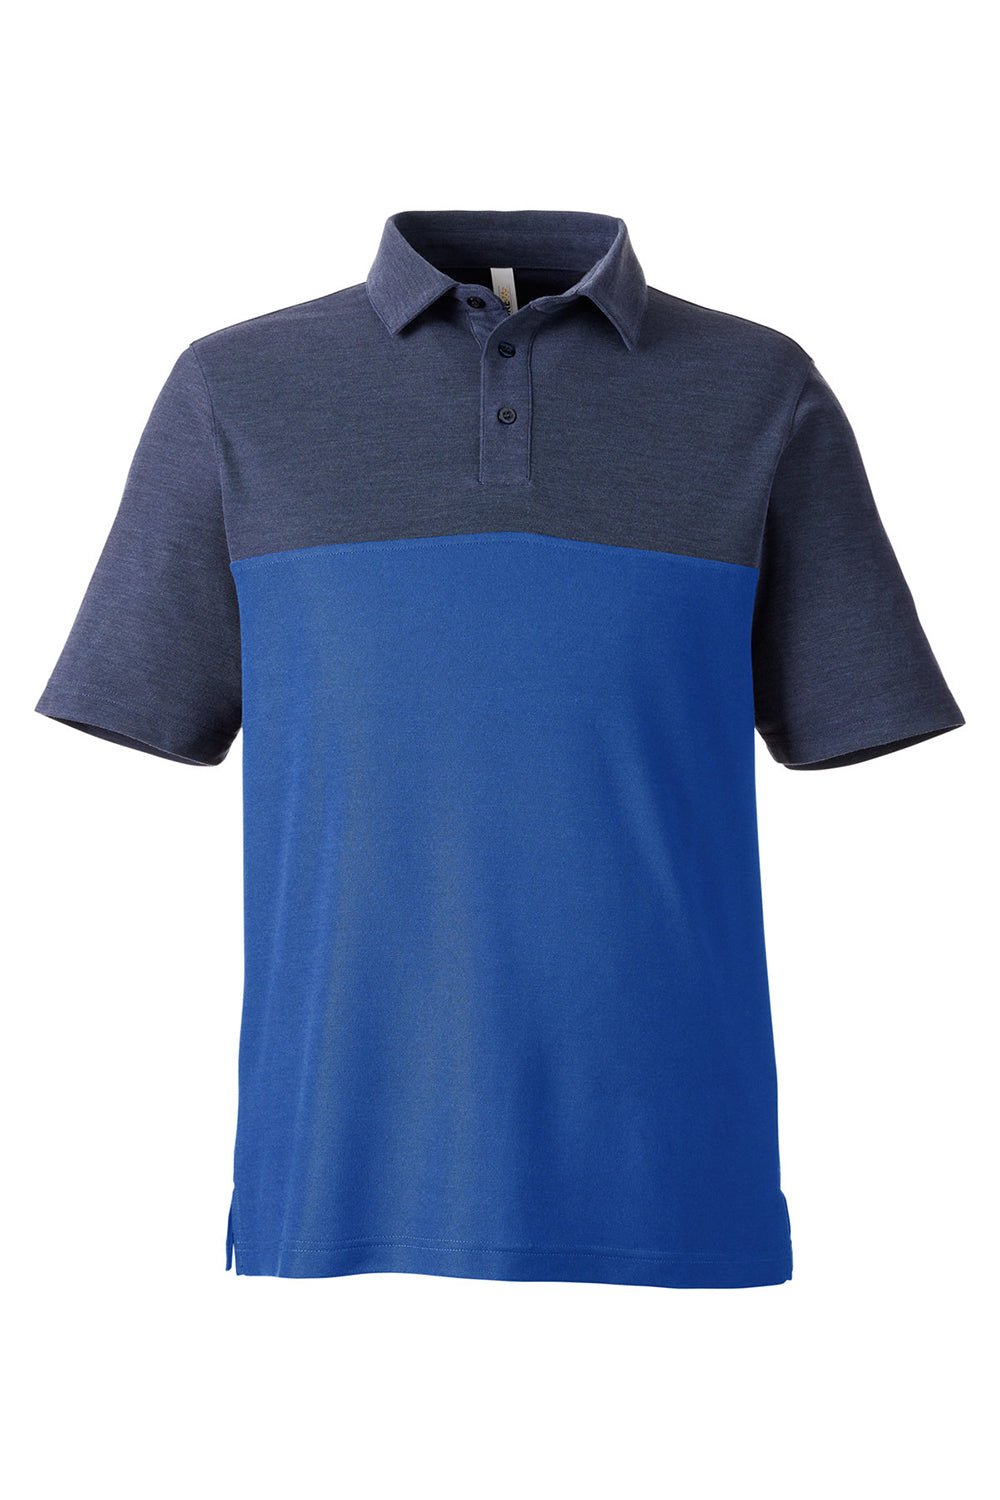 Core 365 CE112C Mens Fusion ChromaSoft Performance Moisture Wicking Colorblock Short Sleeve Polo Shirt True Royal Blue/Heather Navy Blue Flat Front